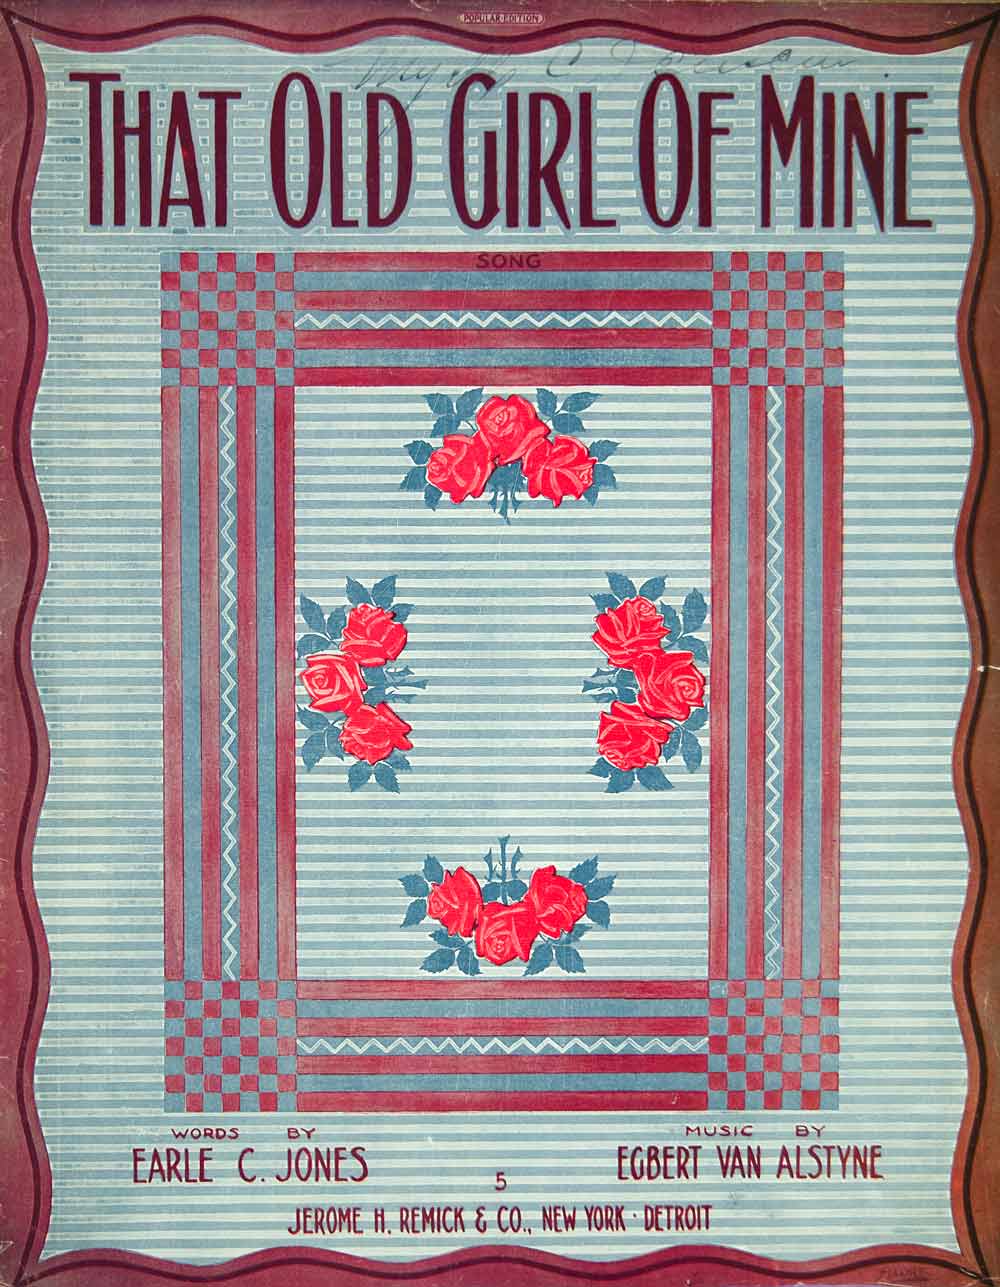 1912 Sheet Music That Old Girl of Mine Earle C. Jones Egbert Van Alstyne ZSM2